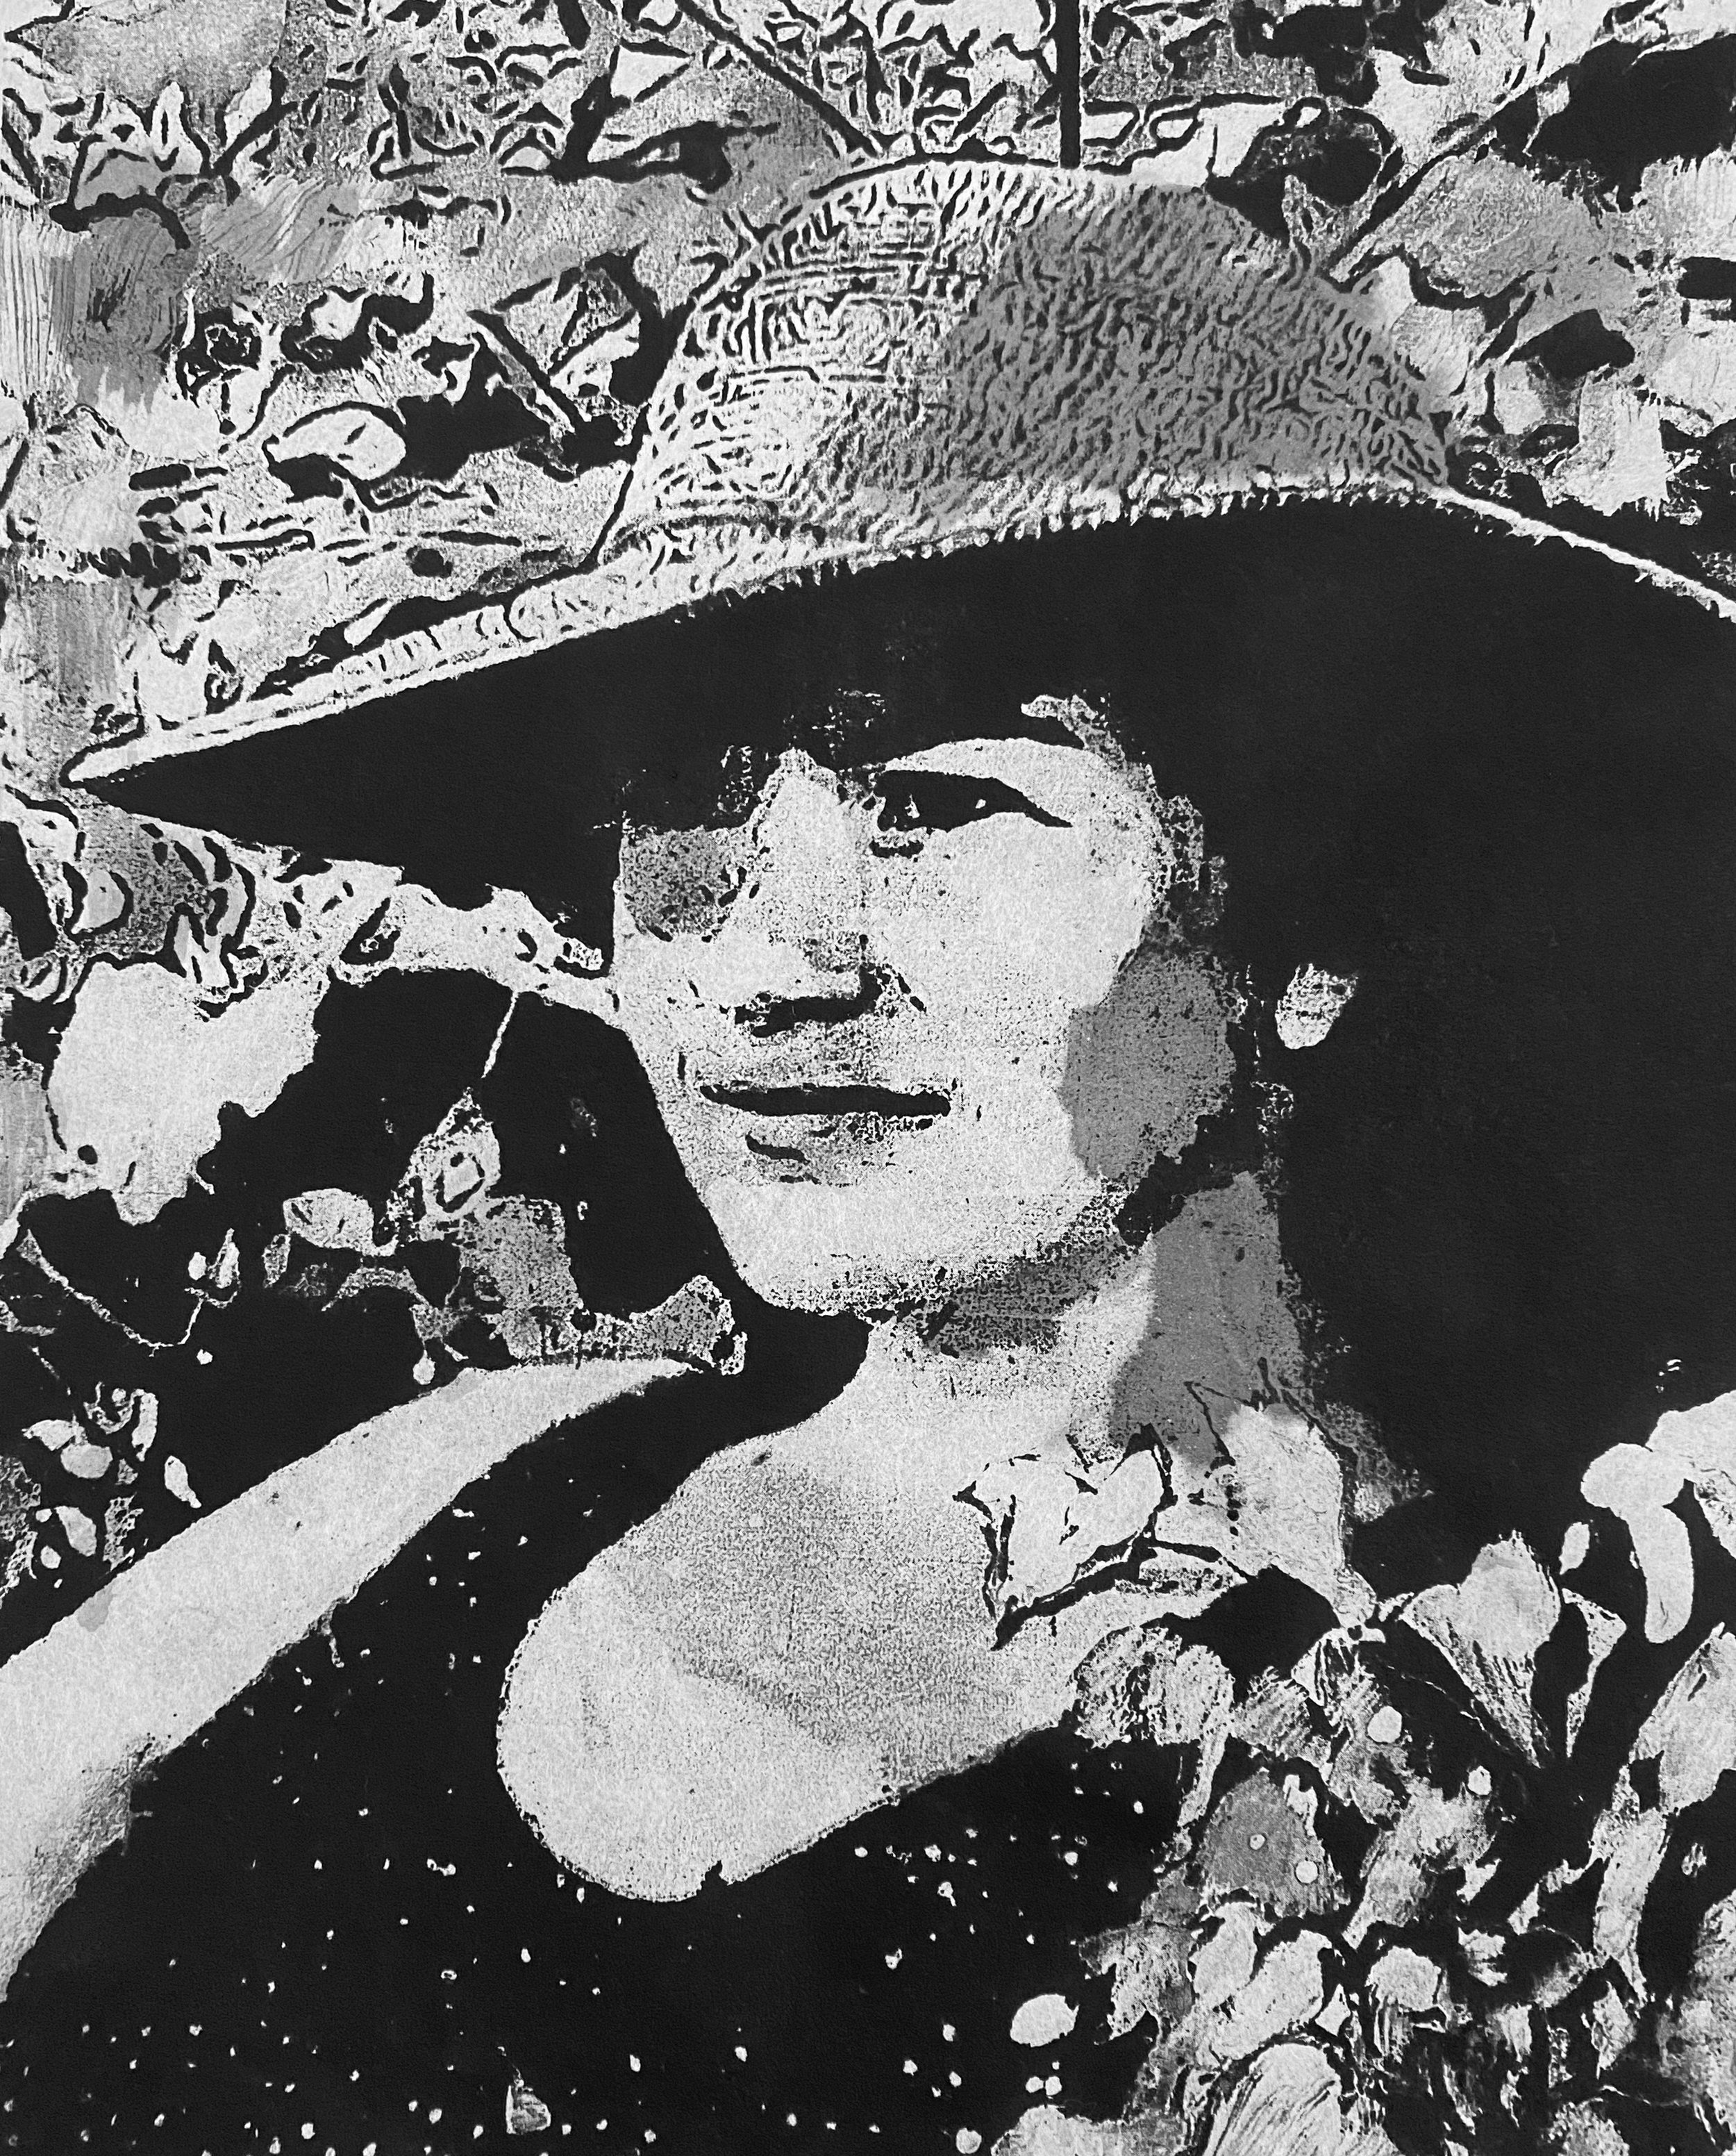 Kate, lithograph, 8 x 10", on kozo paper